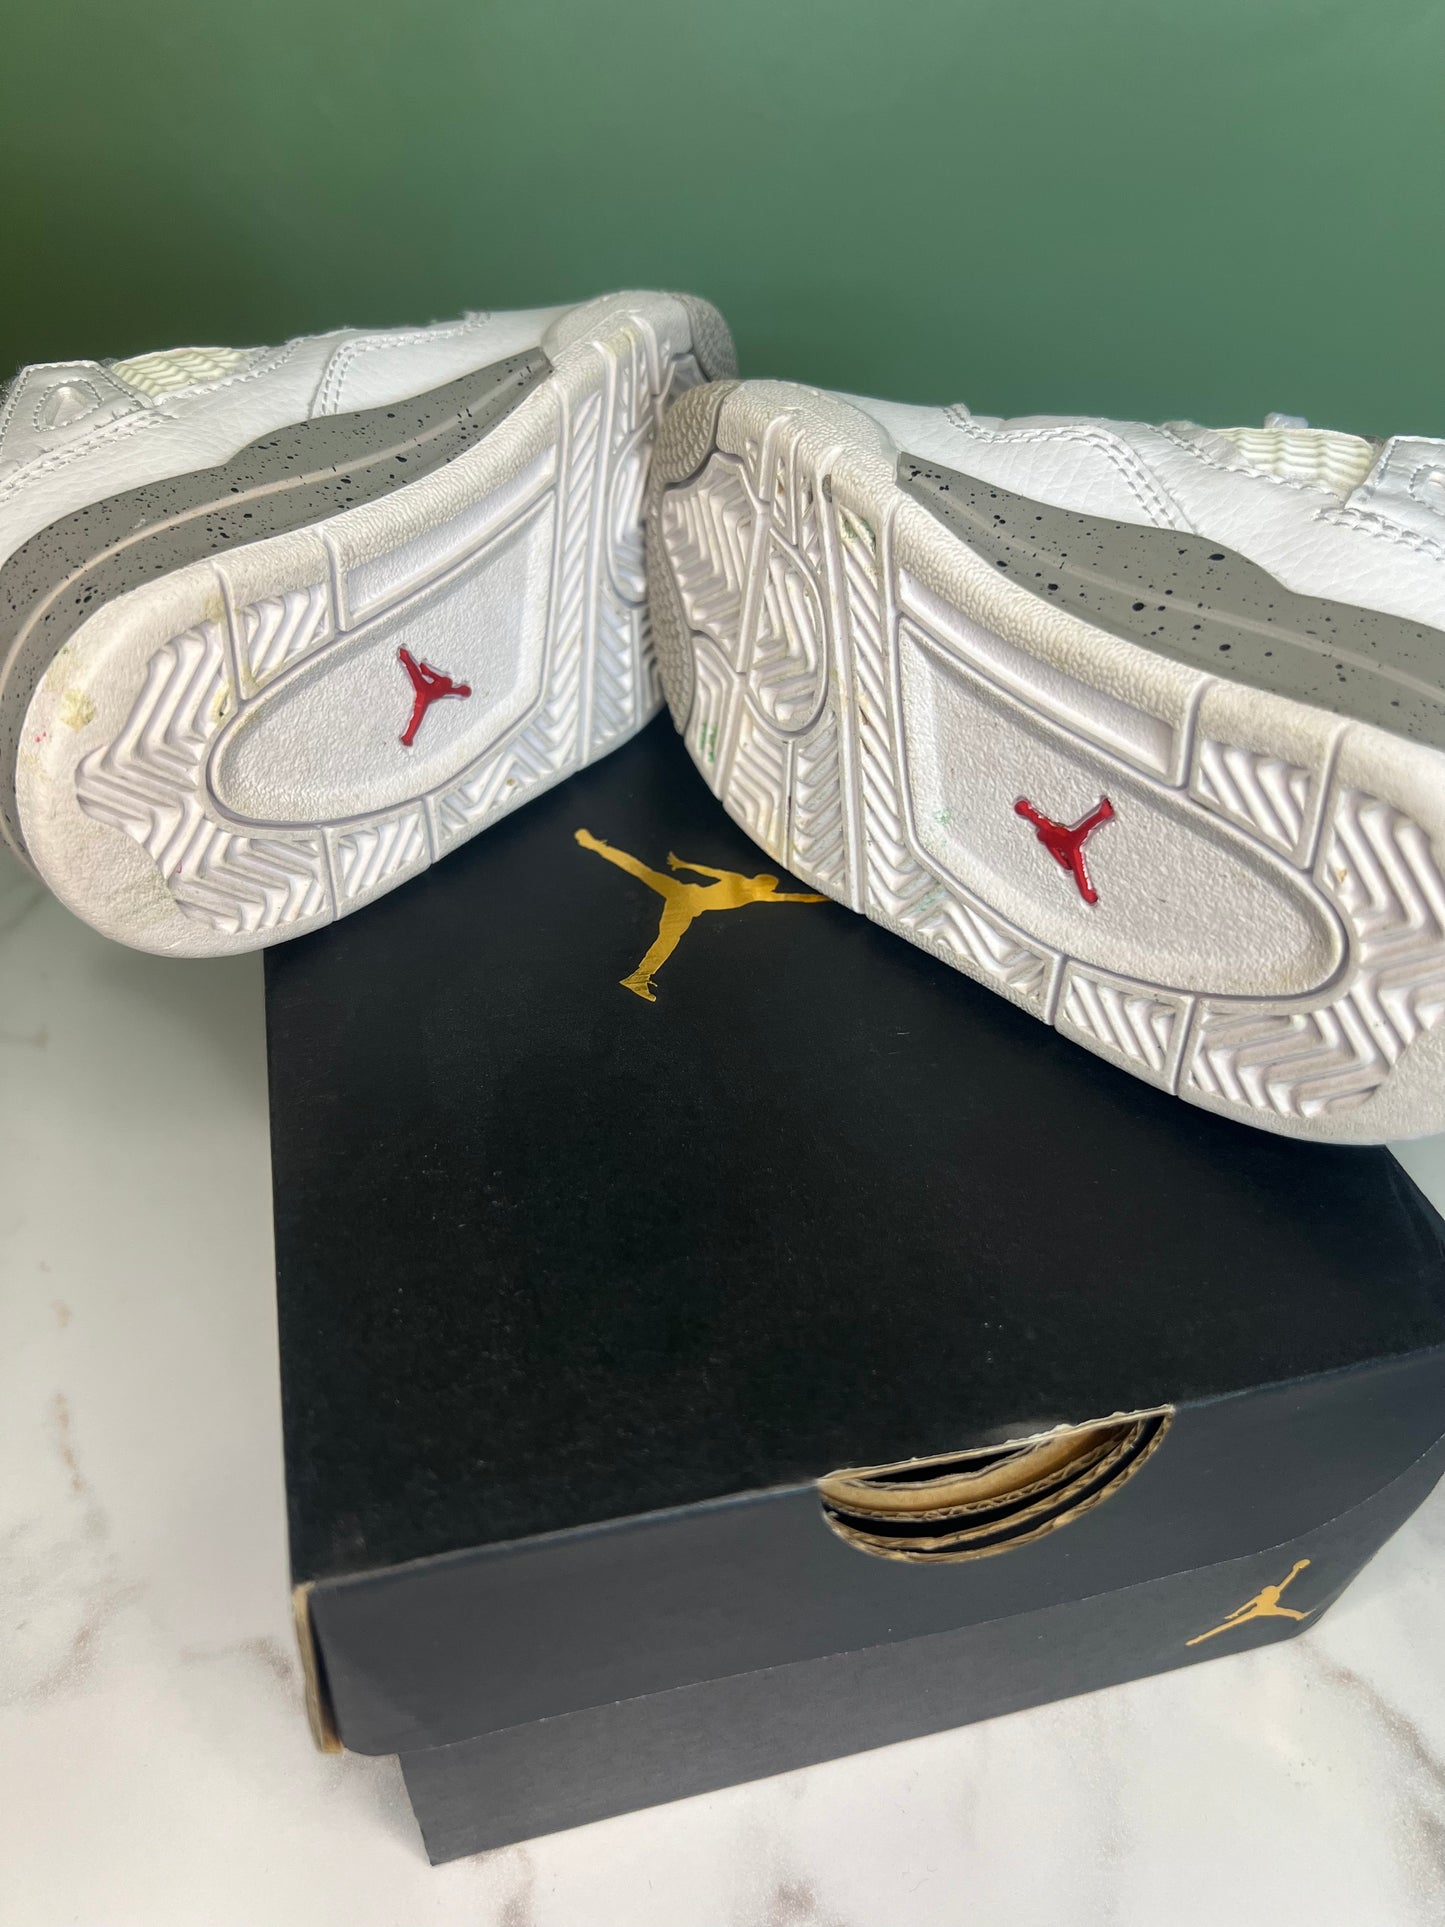 Jordan 4 Retro (TD) White & Gray Sneakers 7C